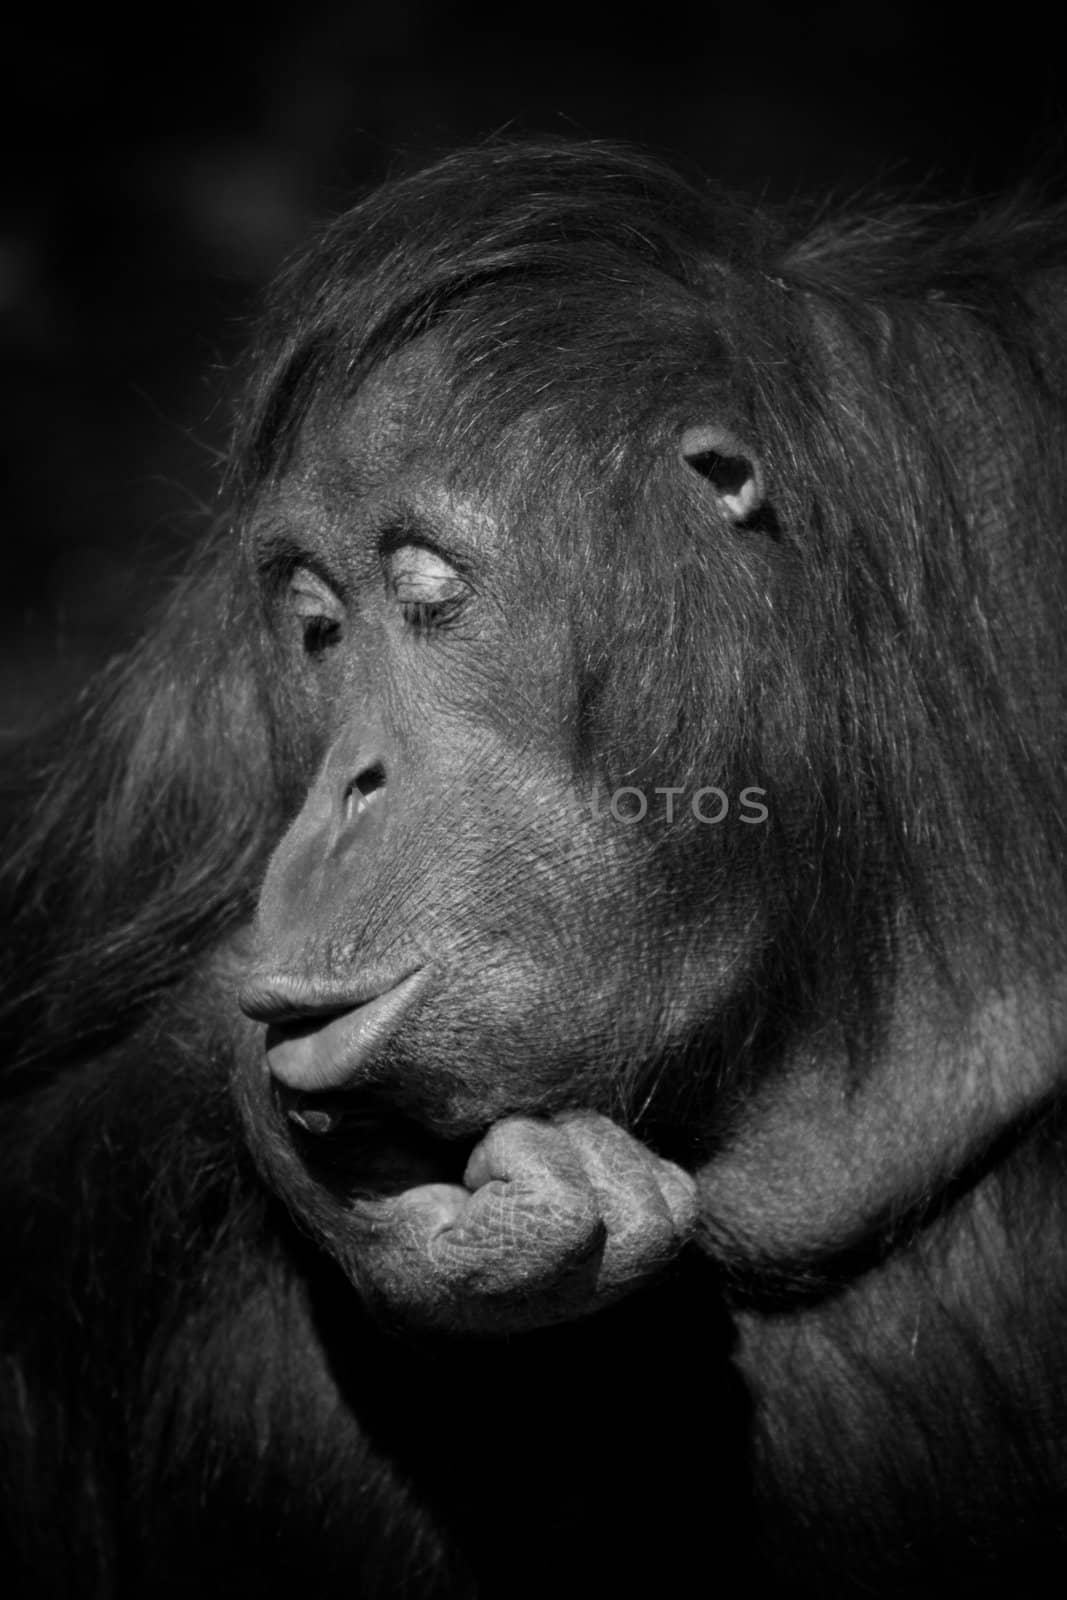 Orangutan pursing it's lips in black and white